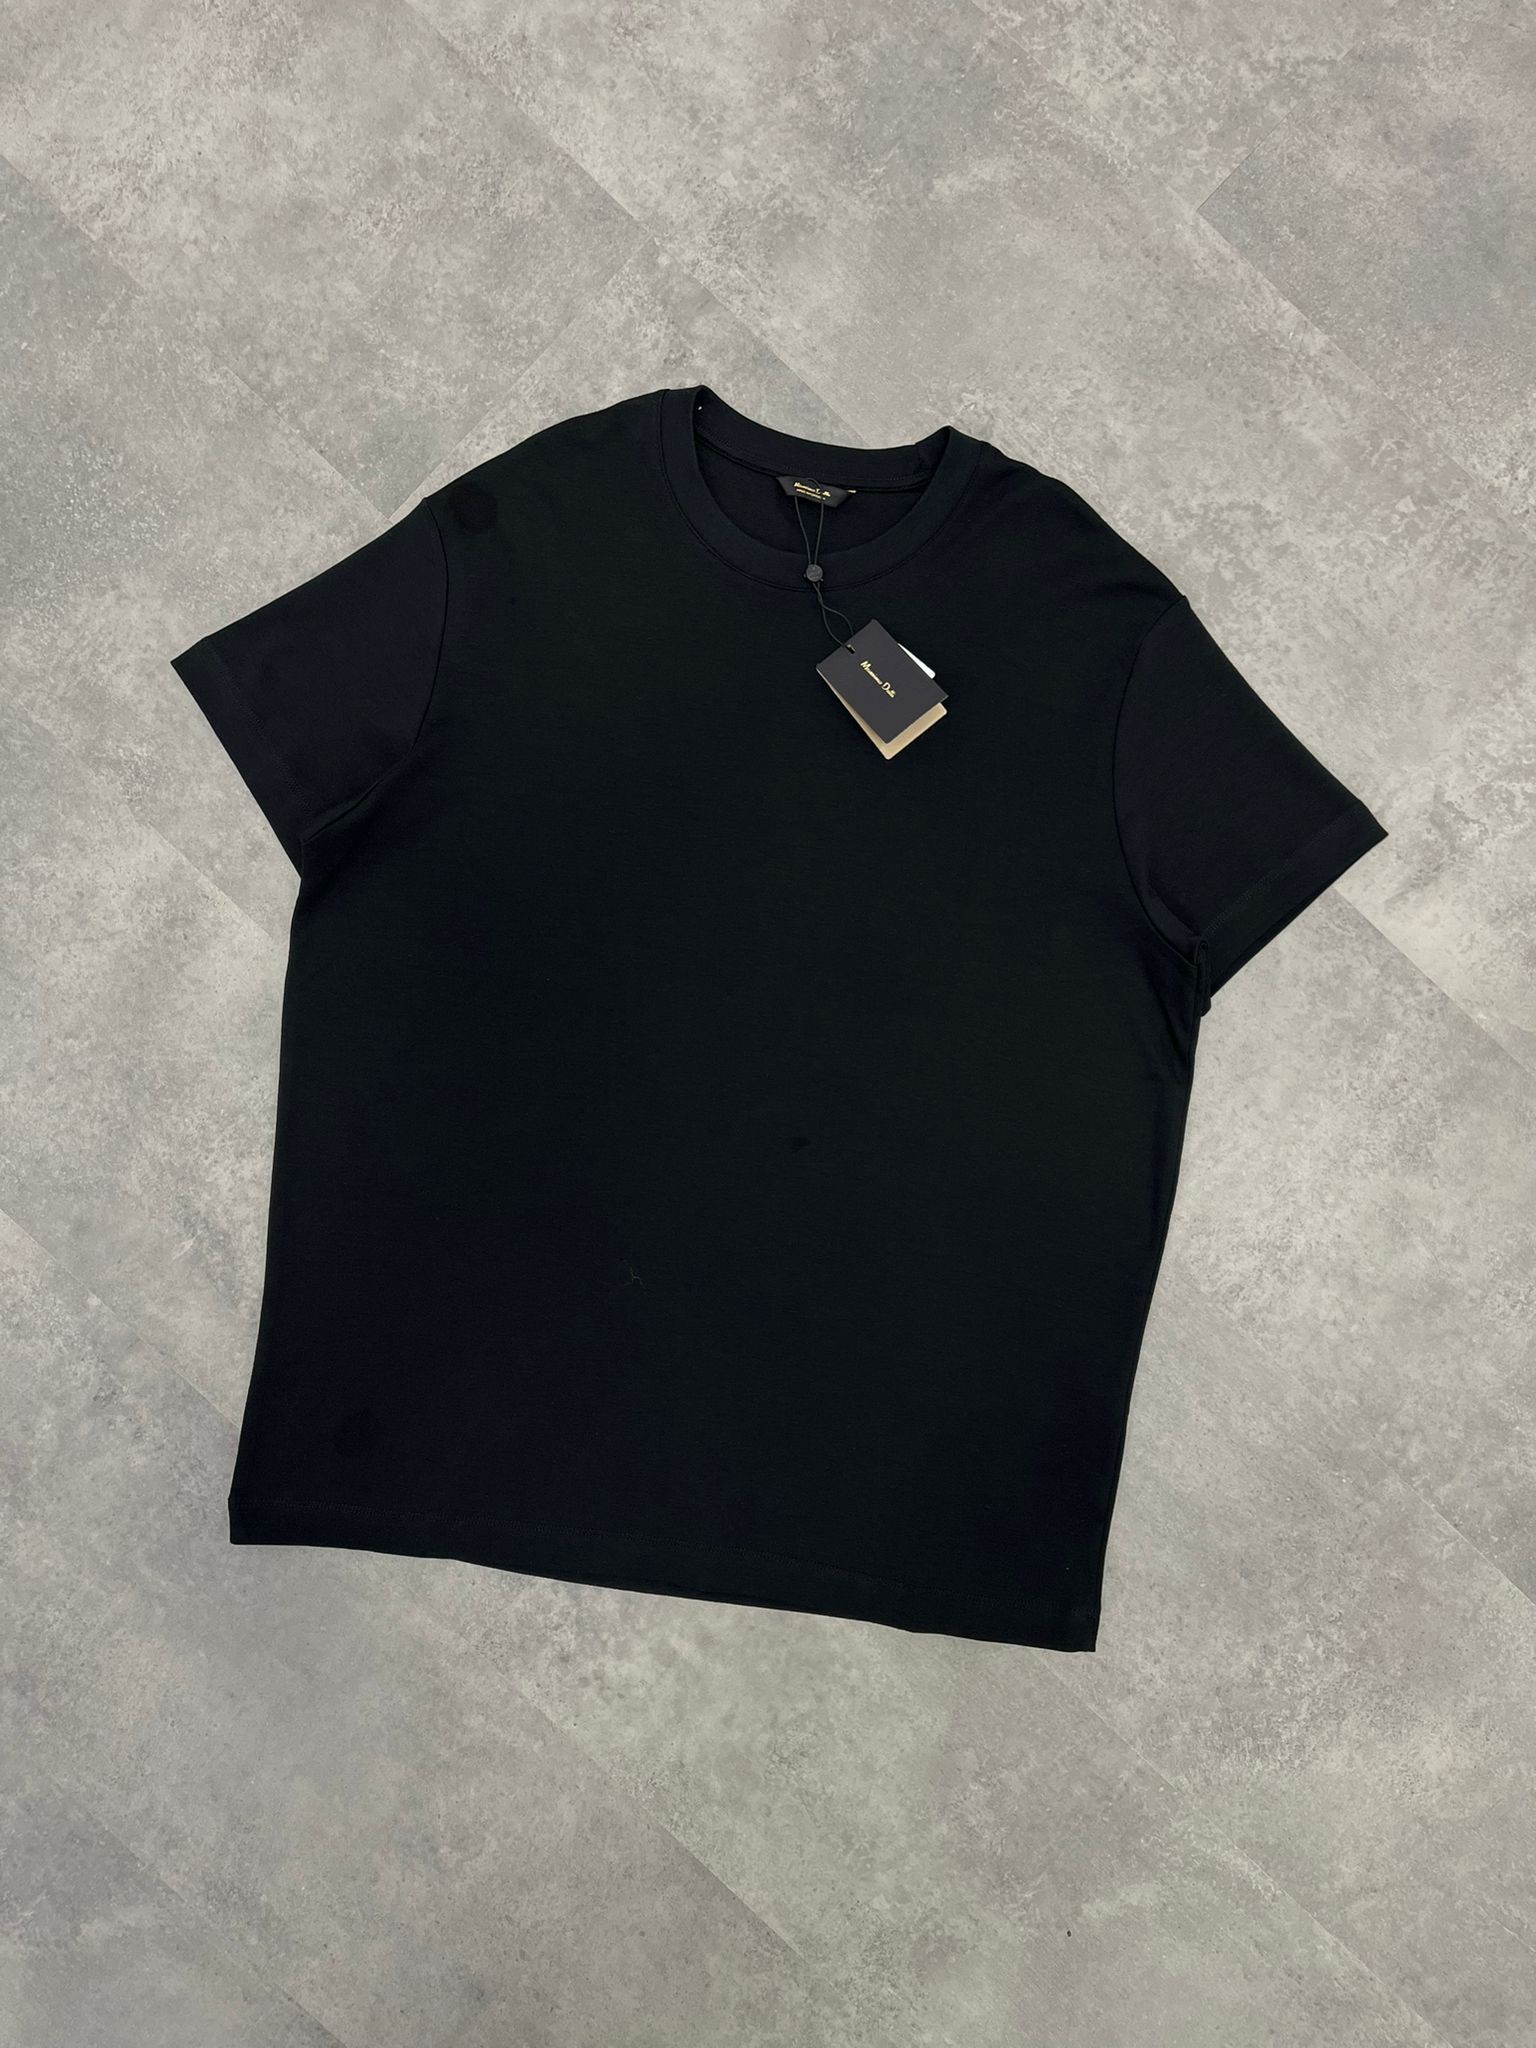 Yeni Sezon Organik Pamuk Black Relax Fit T-shirt